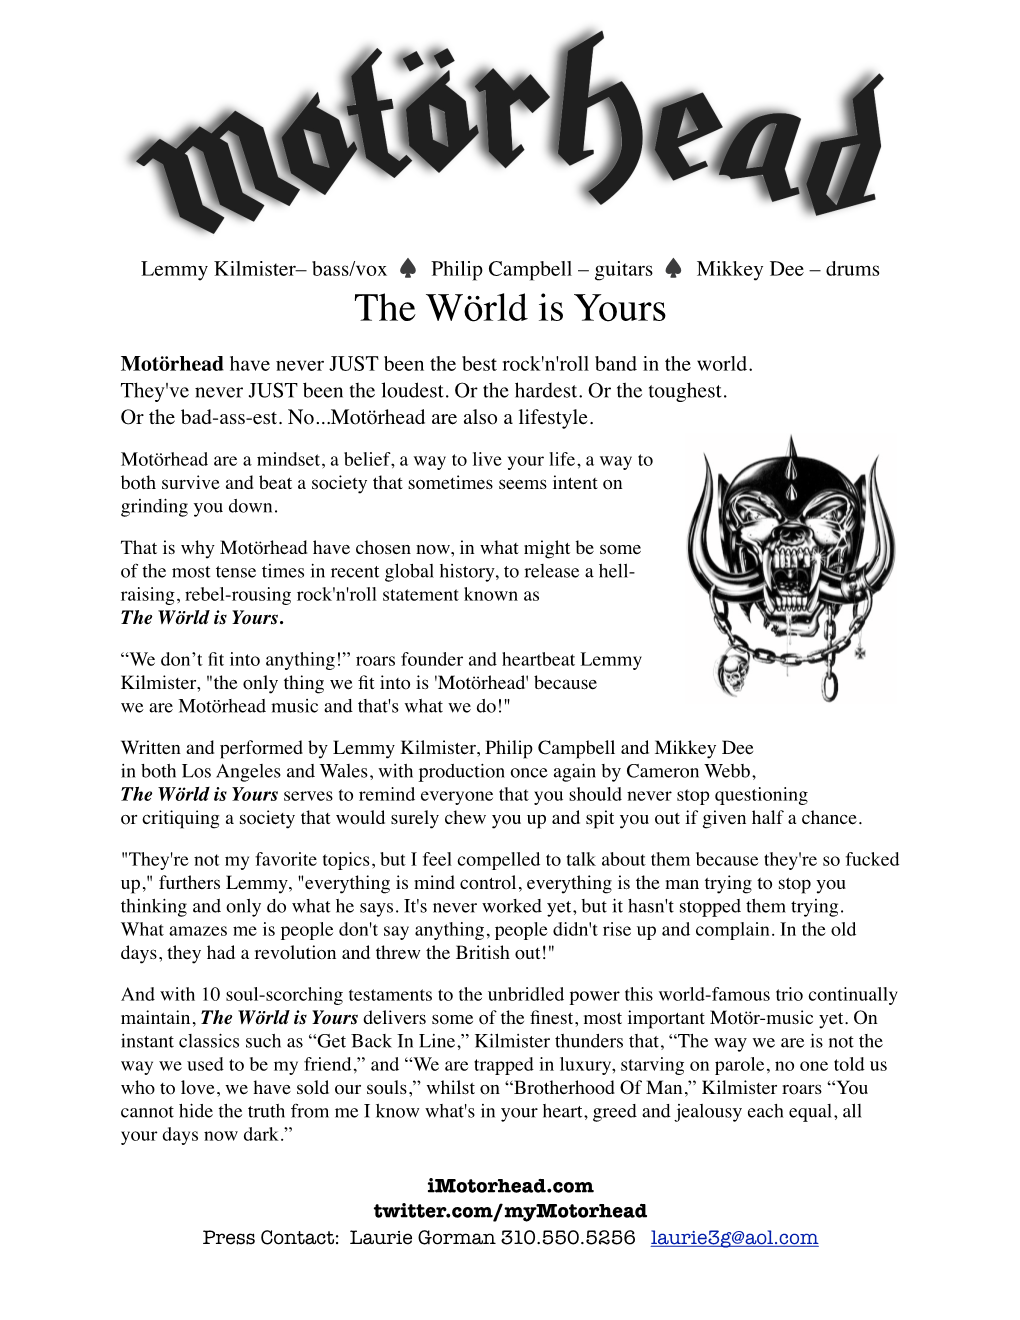 Motorhead Band Bio TWIY 01.11.11 Rev7